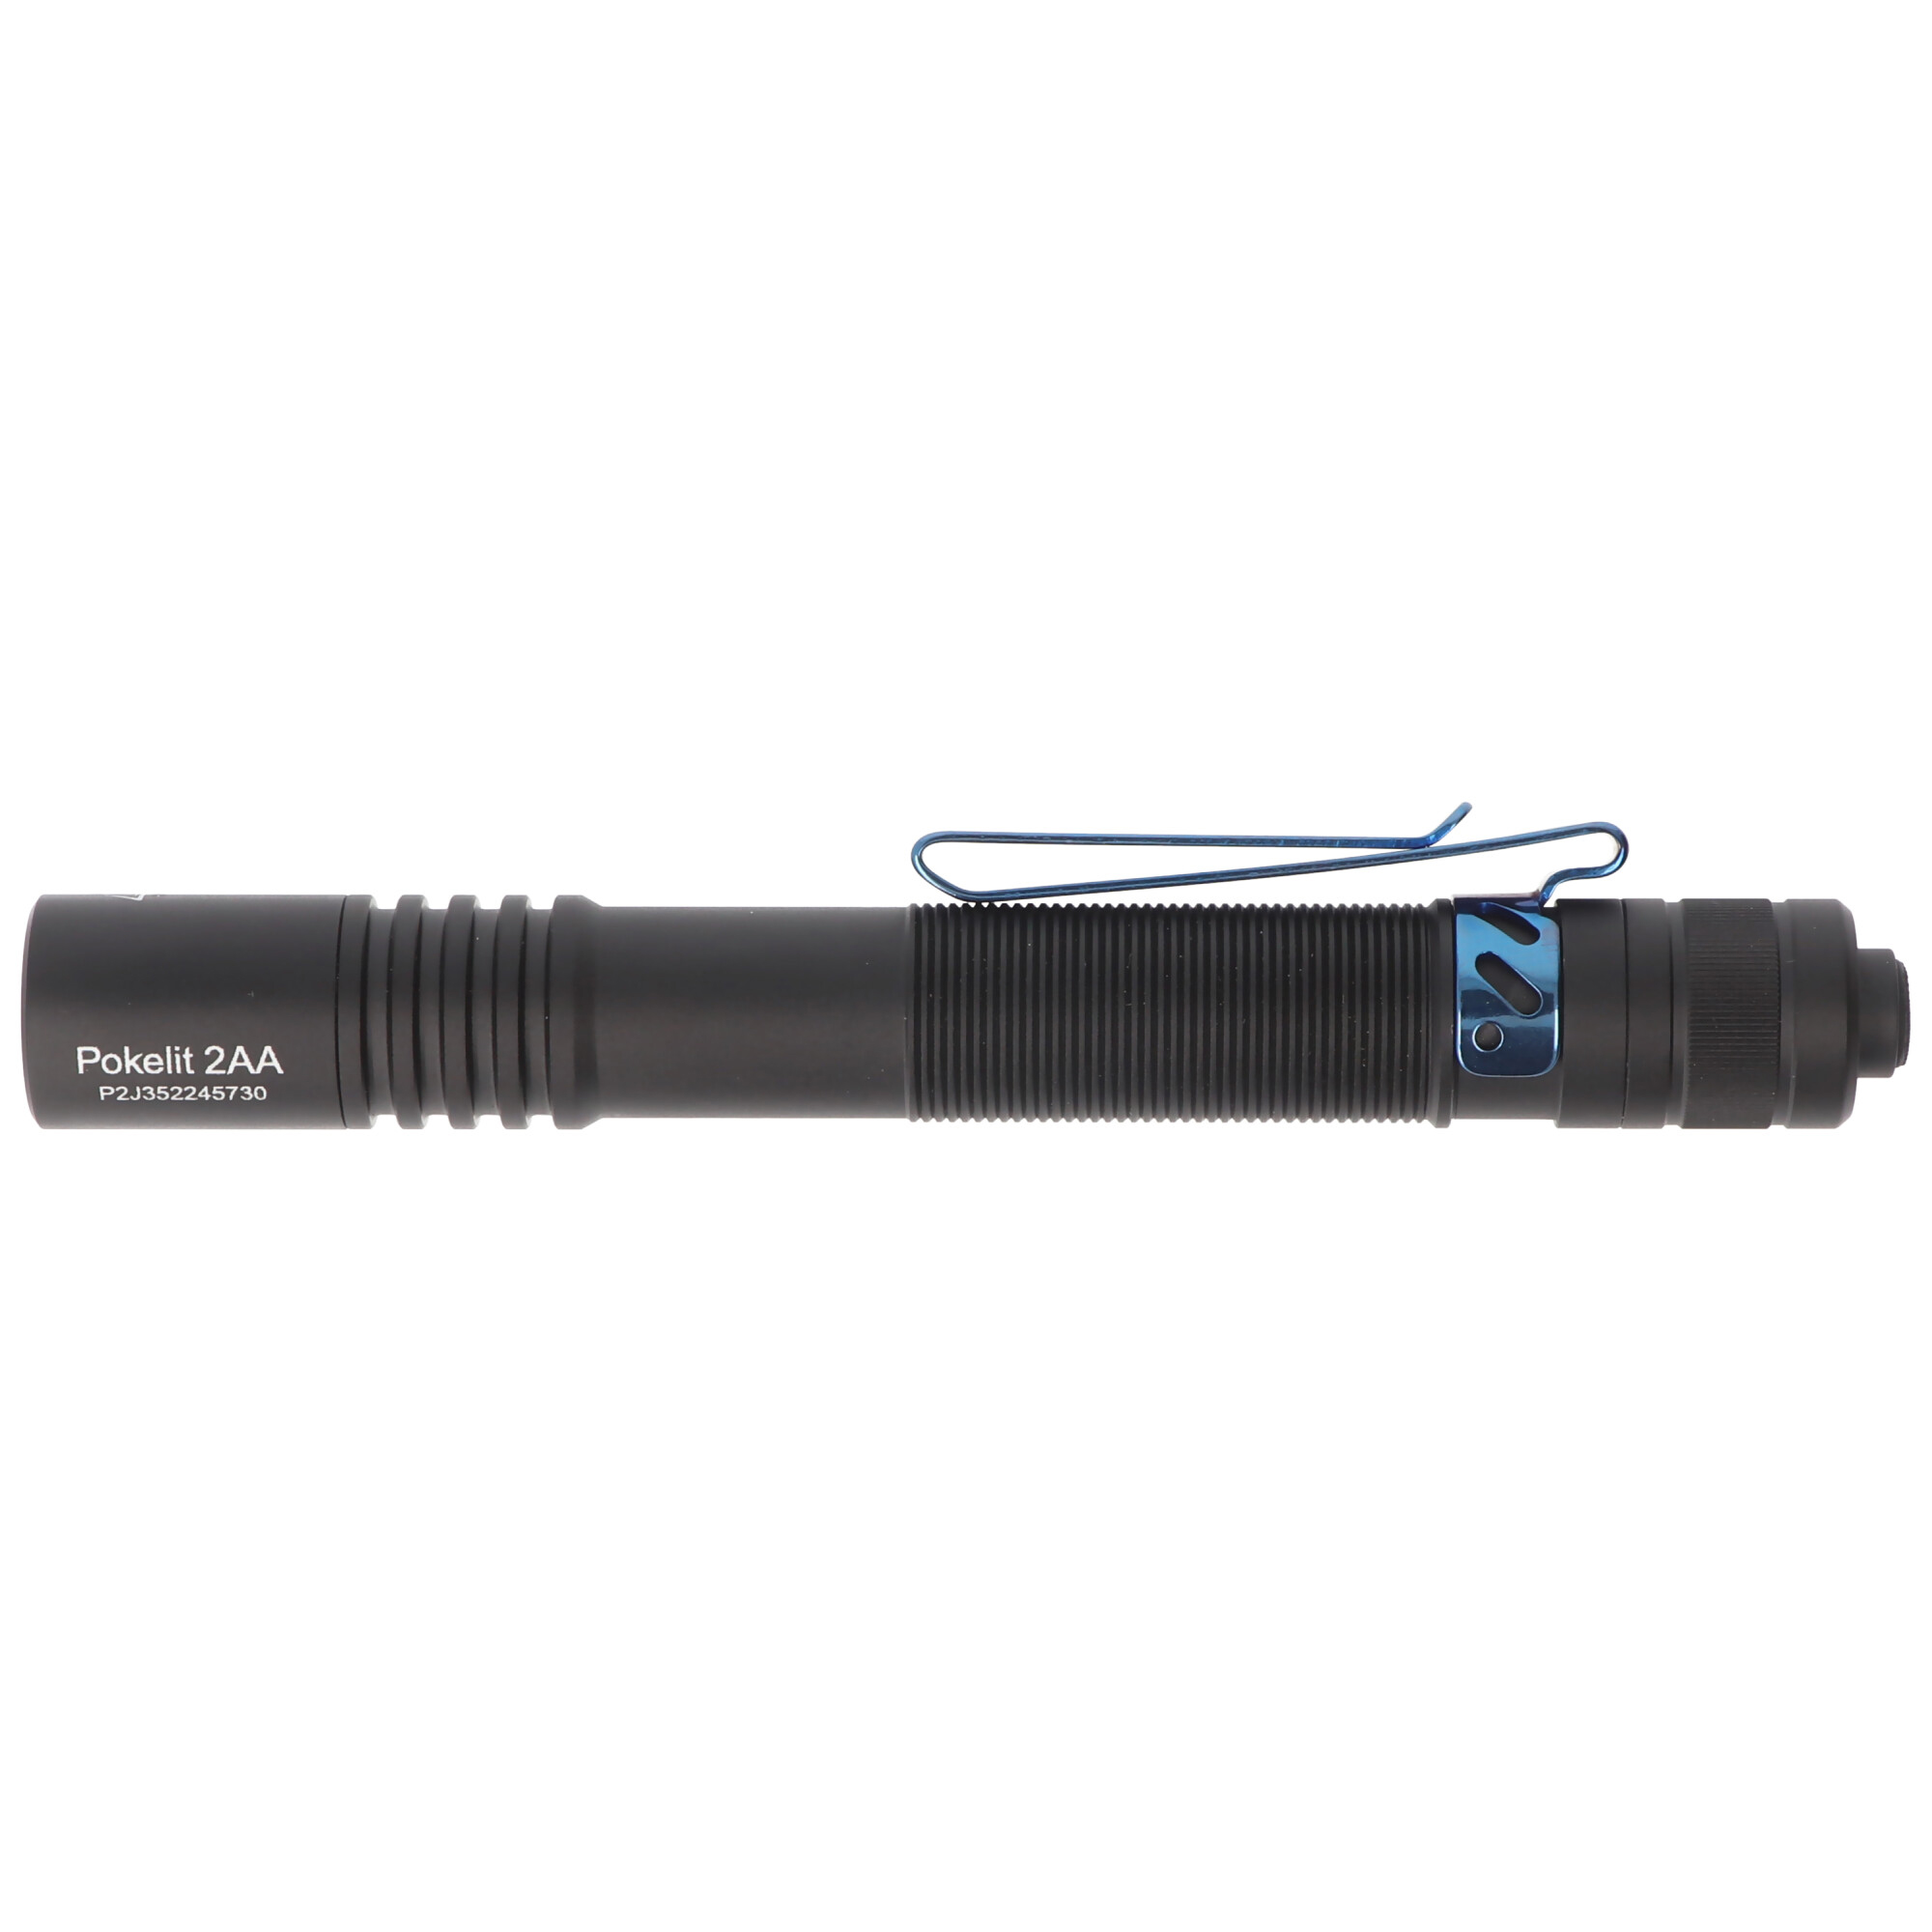 AceBeam Pokelit 2AA EDC-Taschenlampe, 600 Lumen, ideal für den Alltag geeignet, inklusive Li-Ion 14100 1600mAh Akku